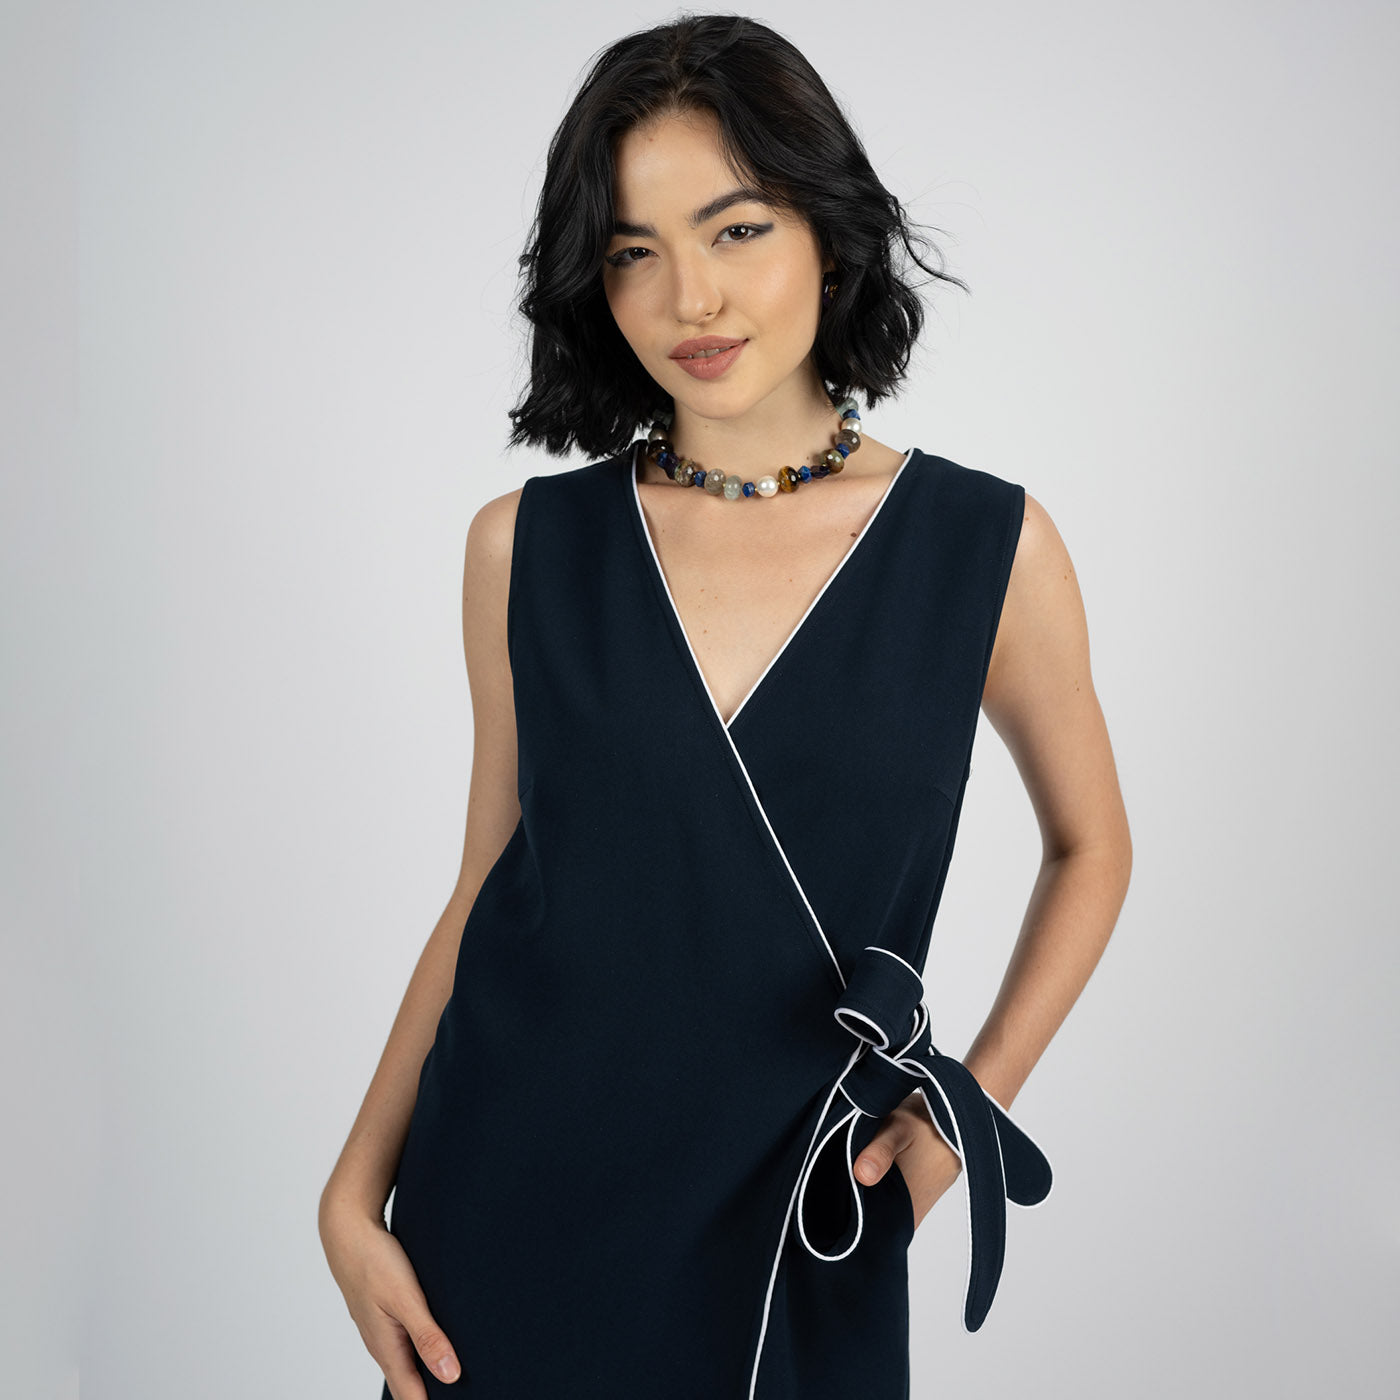 Lauren Acetate Wrap Dress: Sleeveless Chic Style